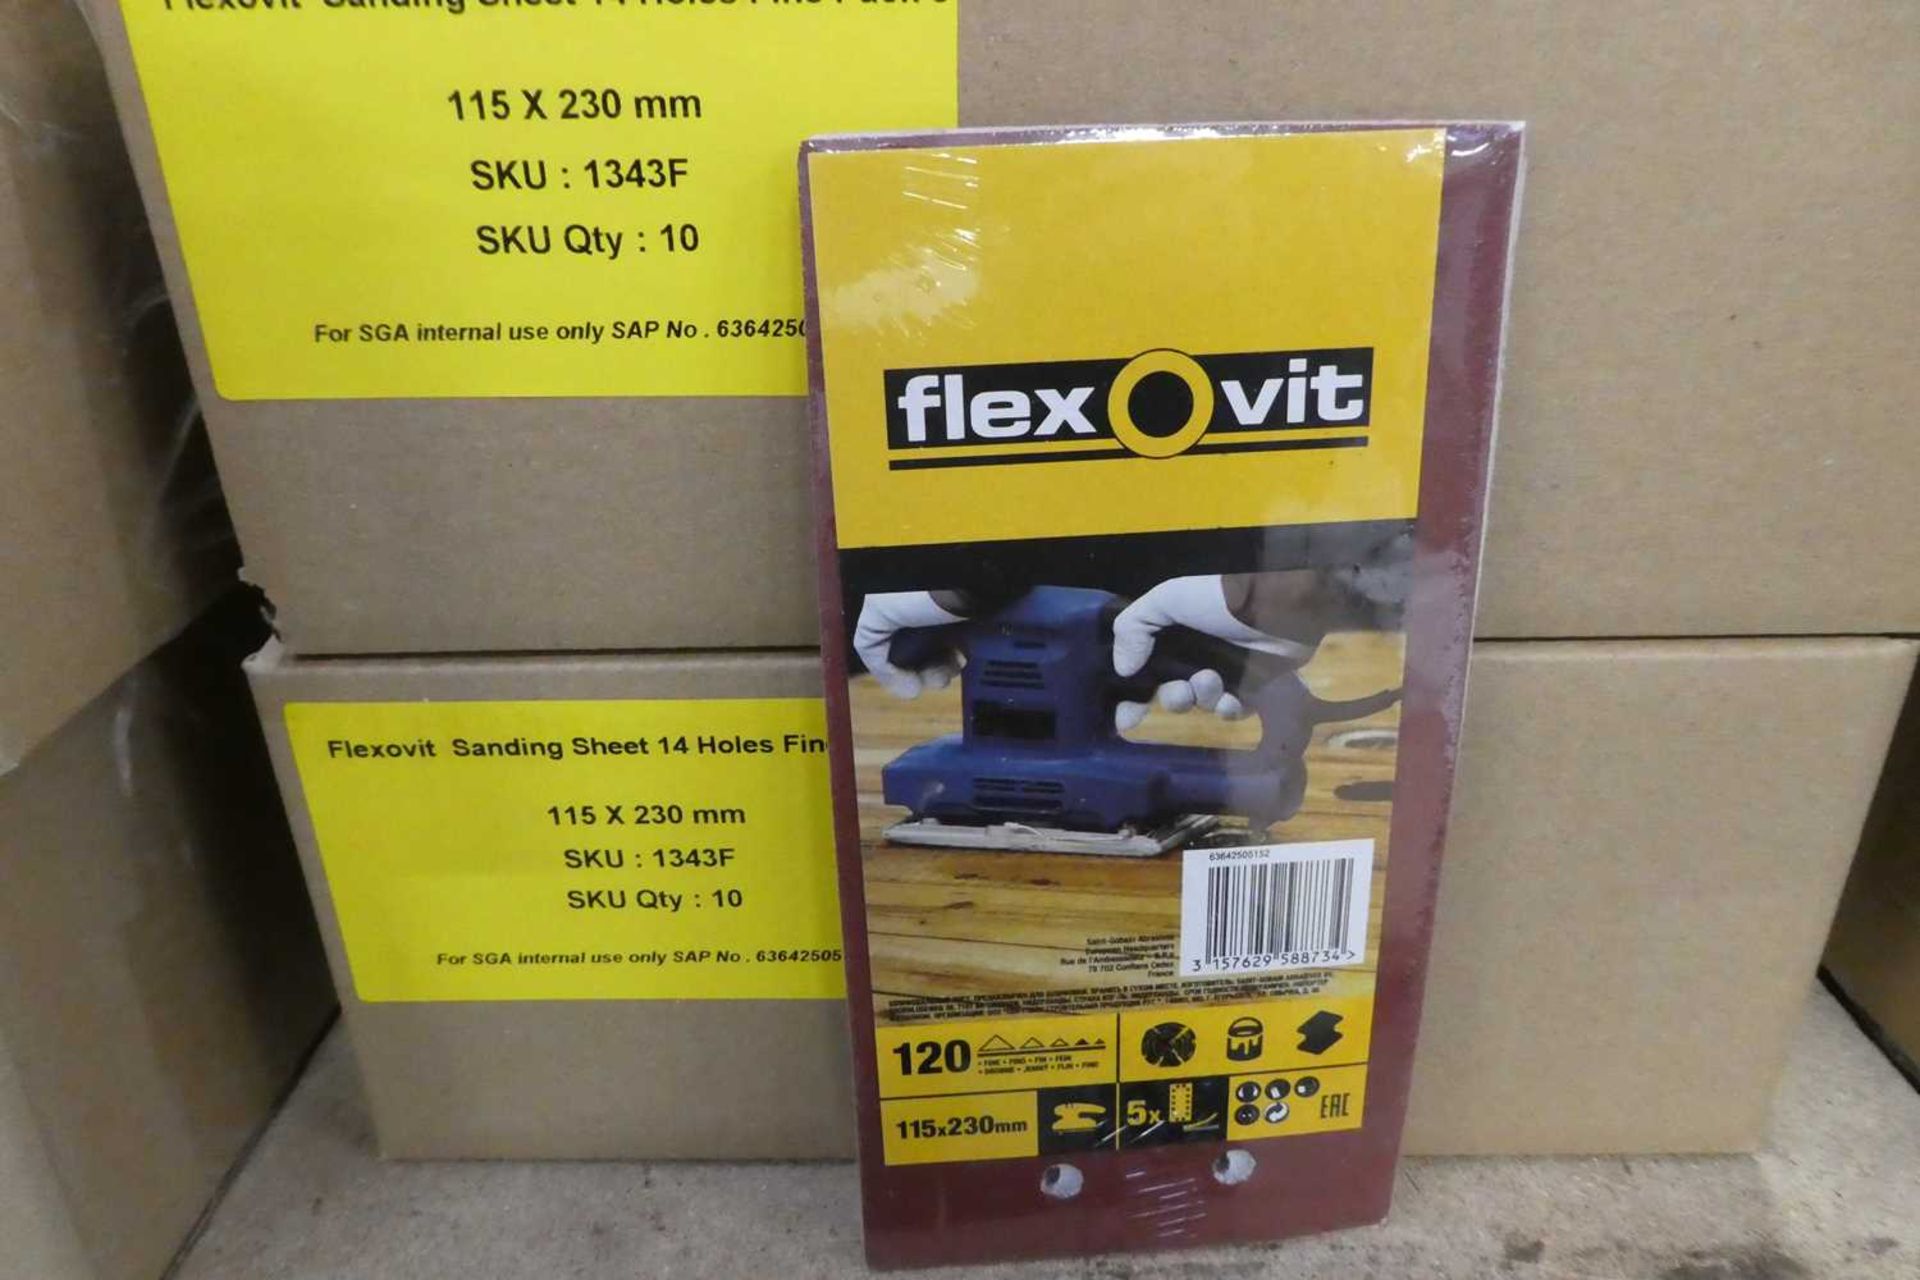 +VAT 4 boxes containing 10 multipacks of 5 Flexovit 14 hole fine sanding sheets - Image 3 of 3